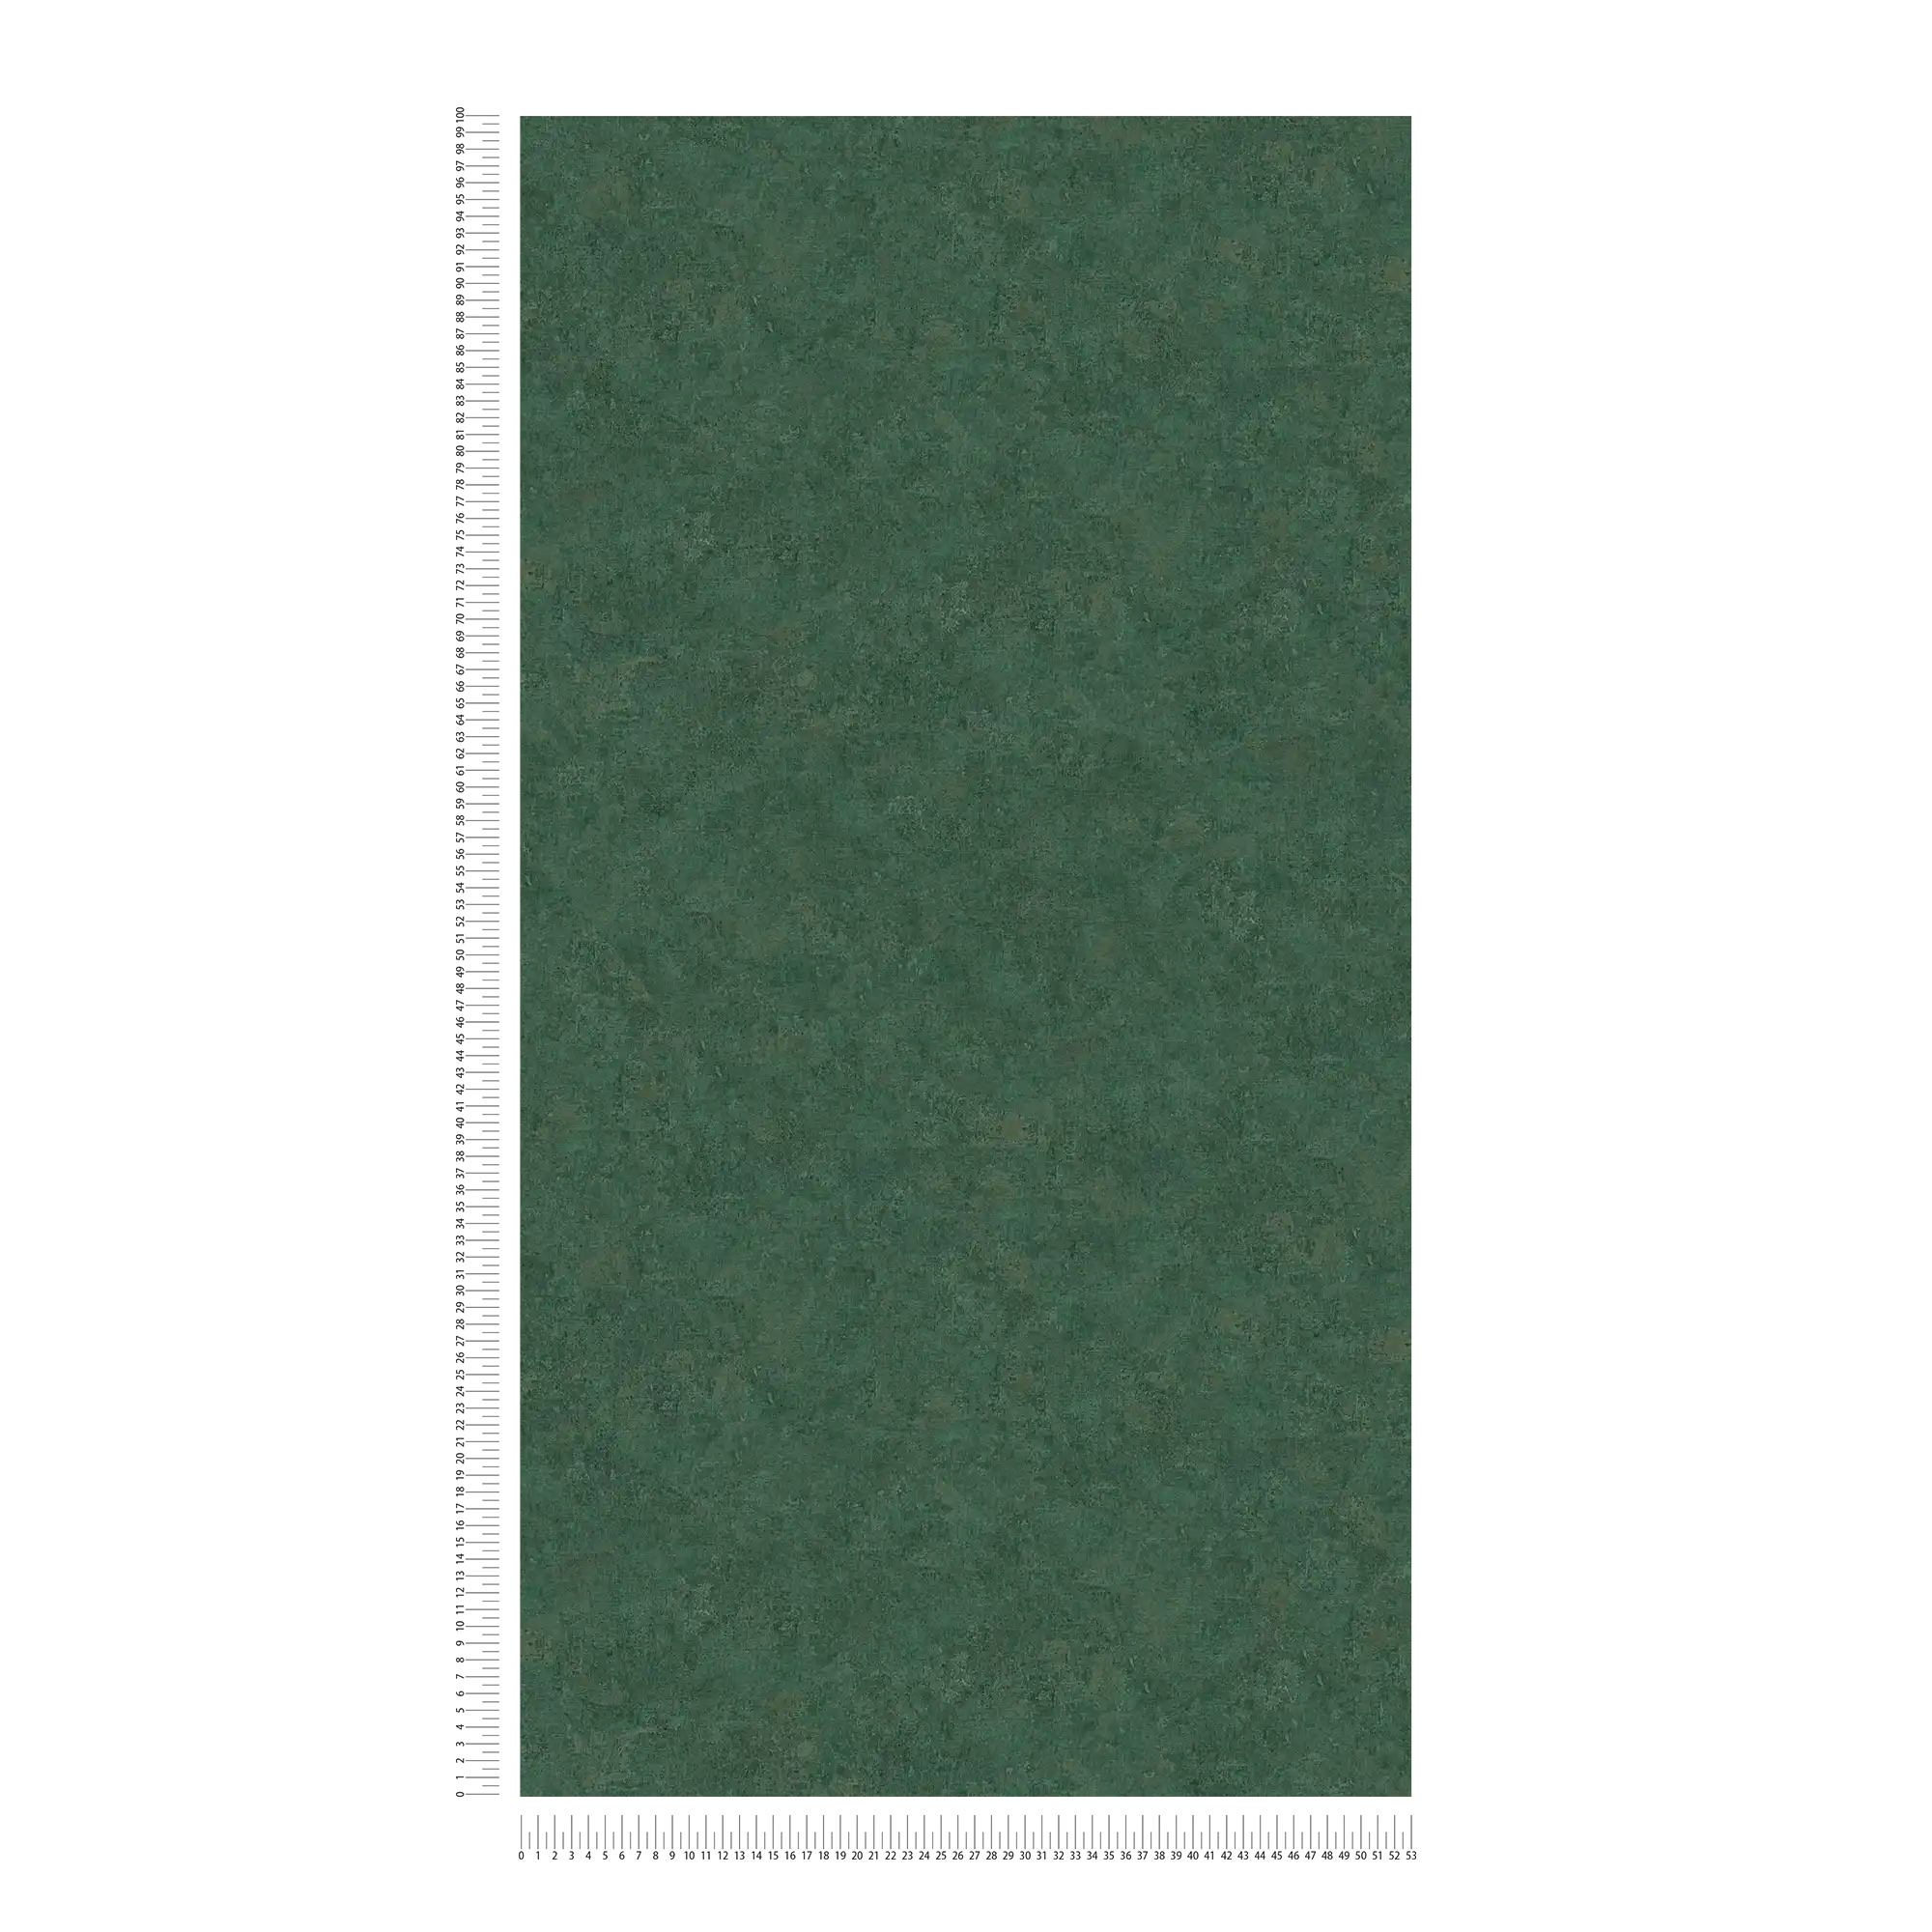             Non-woven wallpaper plain, colour pattern & vintage look - green
        